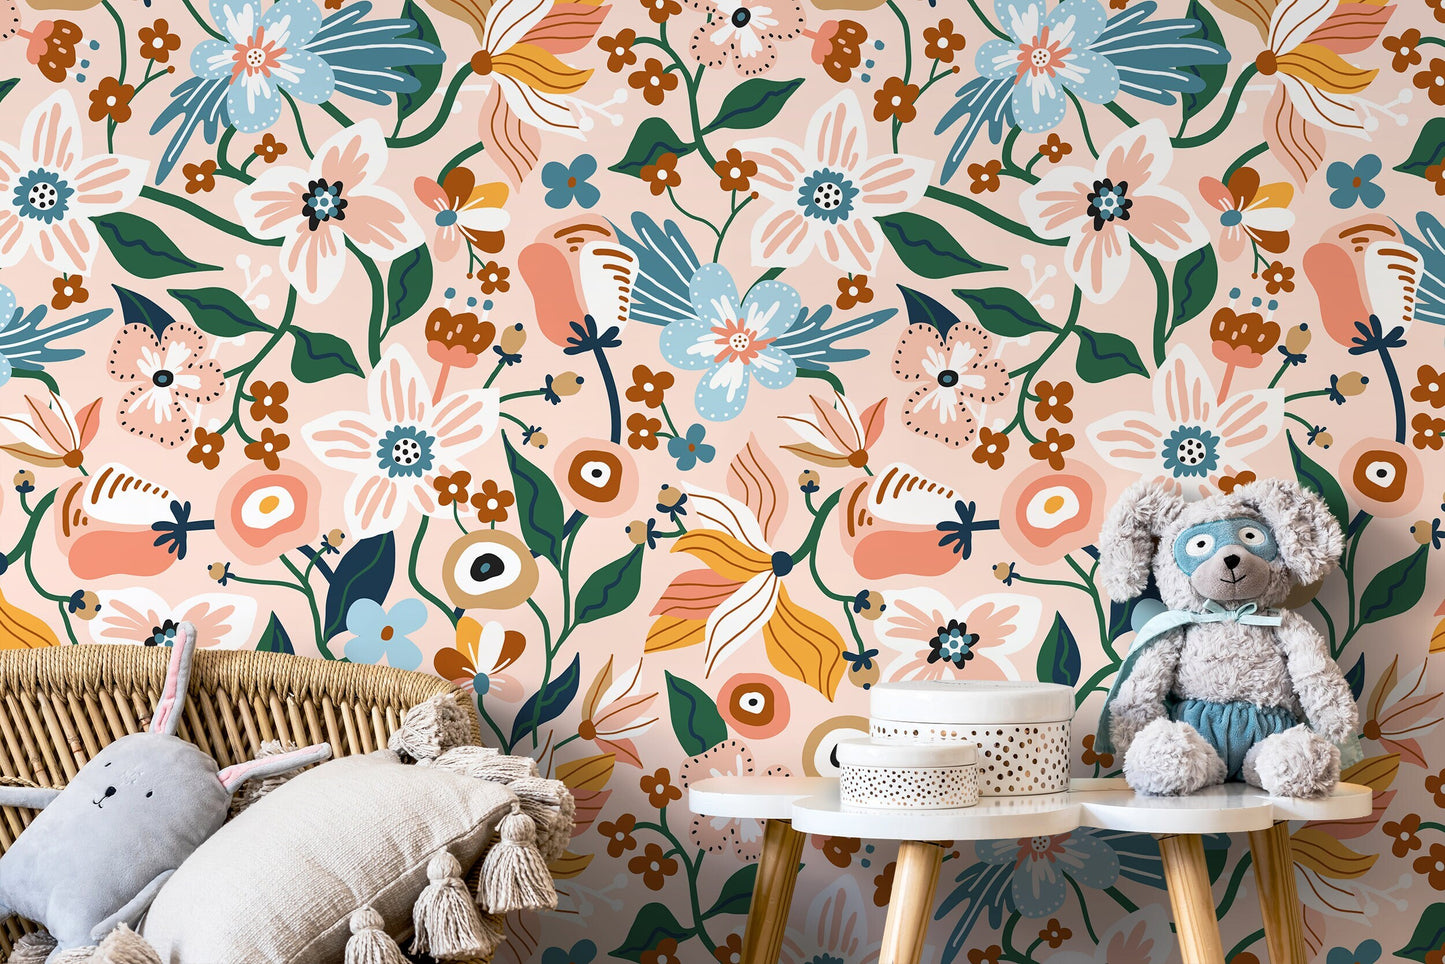 Pink Floral Garden Wallpaper / Peel and Stick Wallpaper Removable Wallpaper Home Decor Wall Art Wall Decor Room Decor - D120